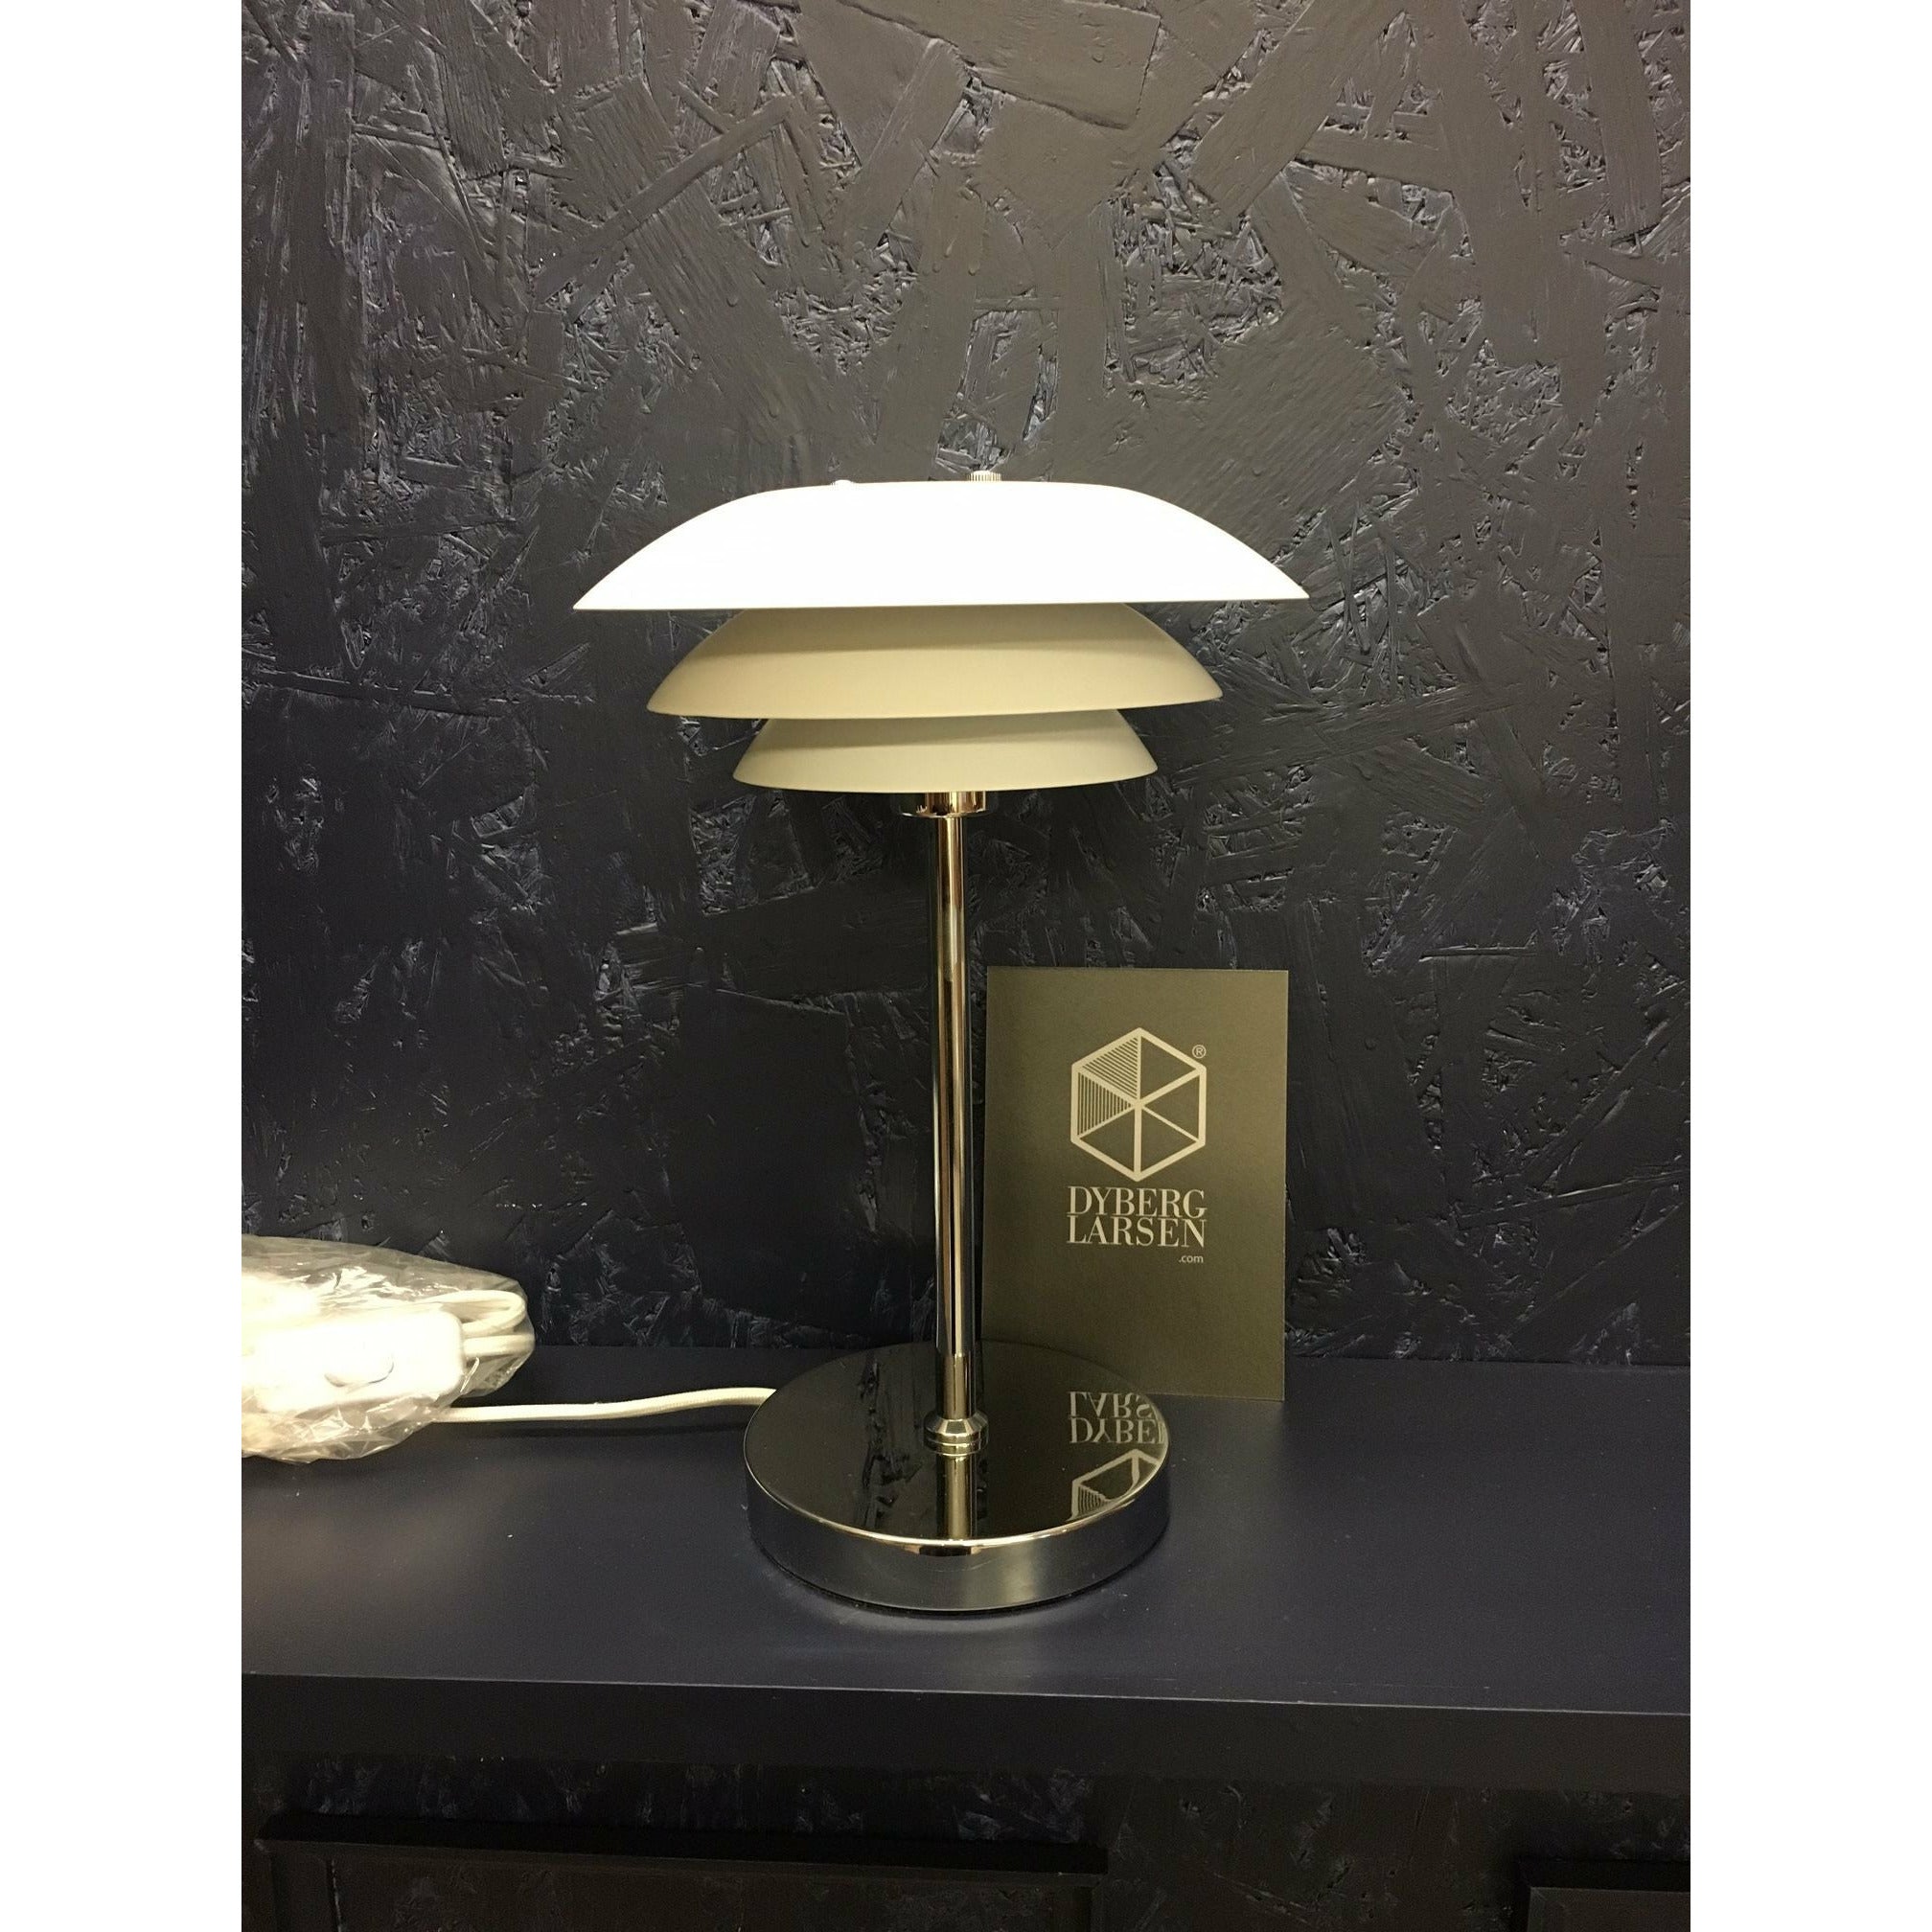 Lampada da tavolo Dyberg Larsen DL20, vetro opale